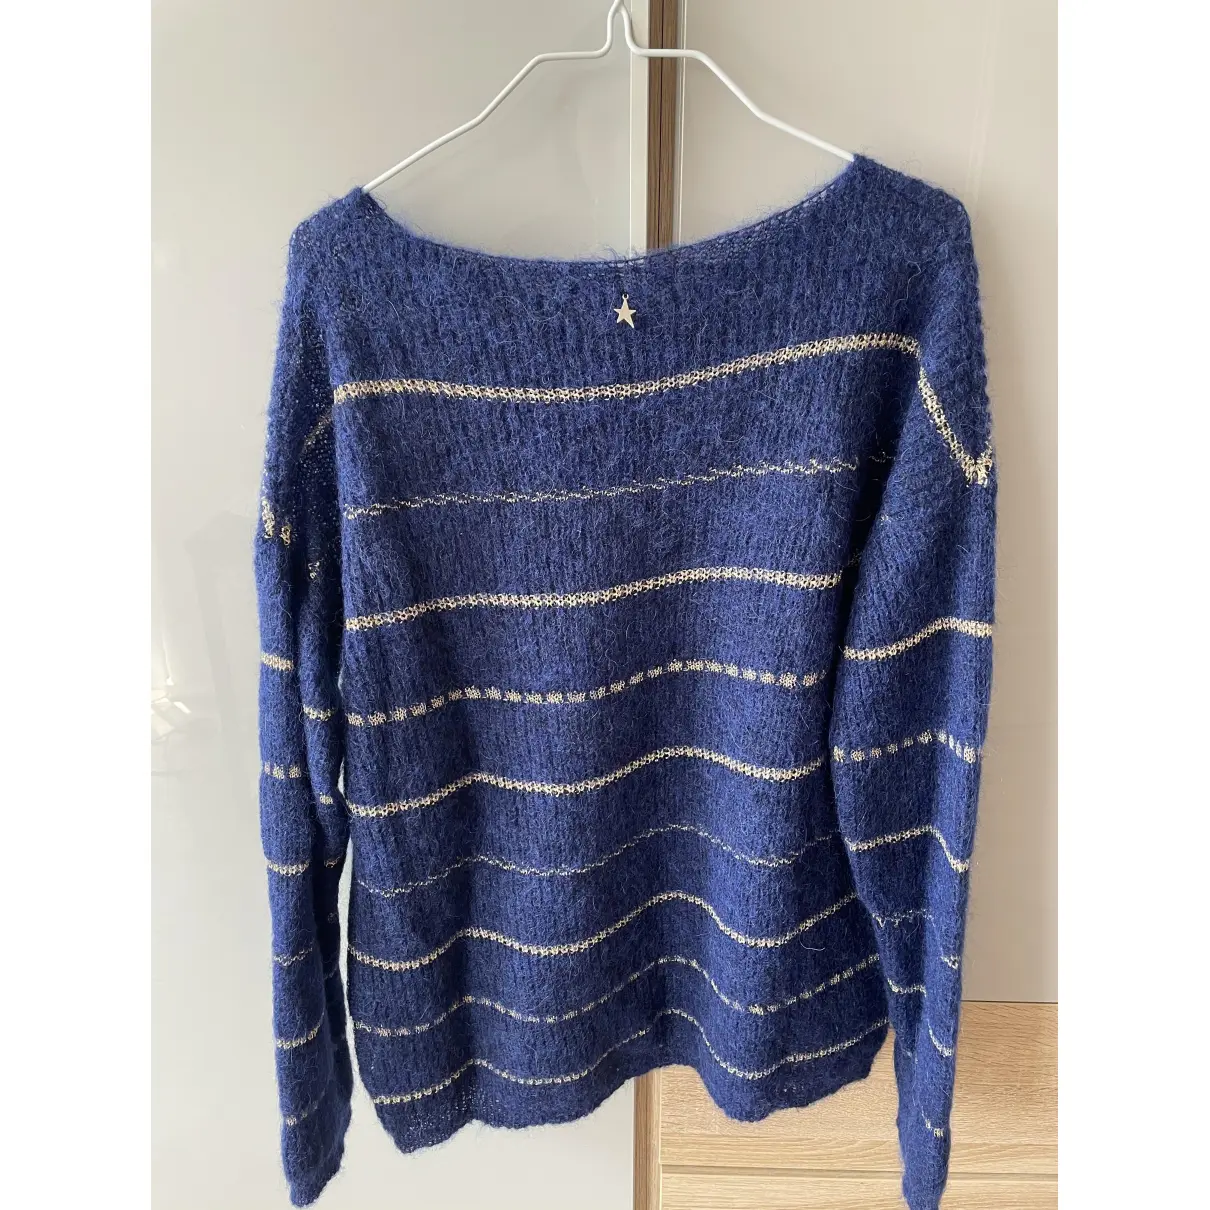 Buy SUD EXPRESS Wool jumper online